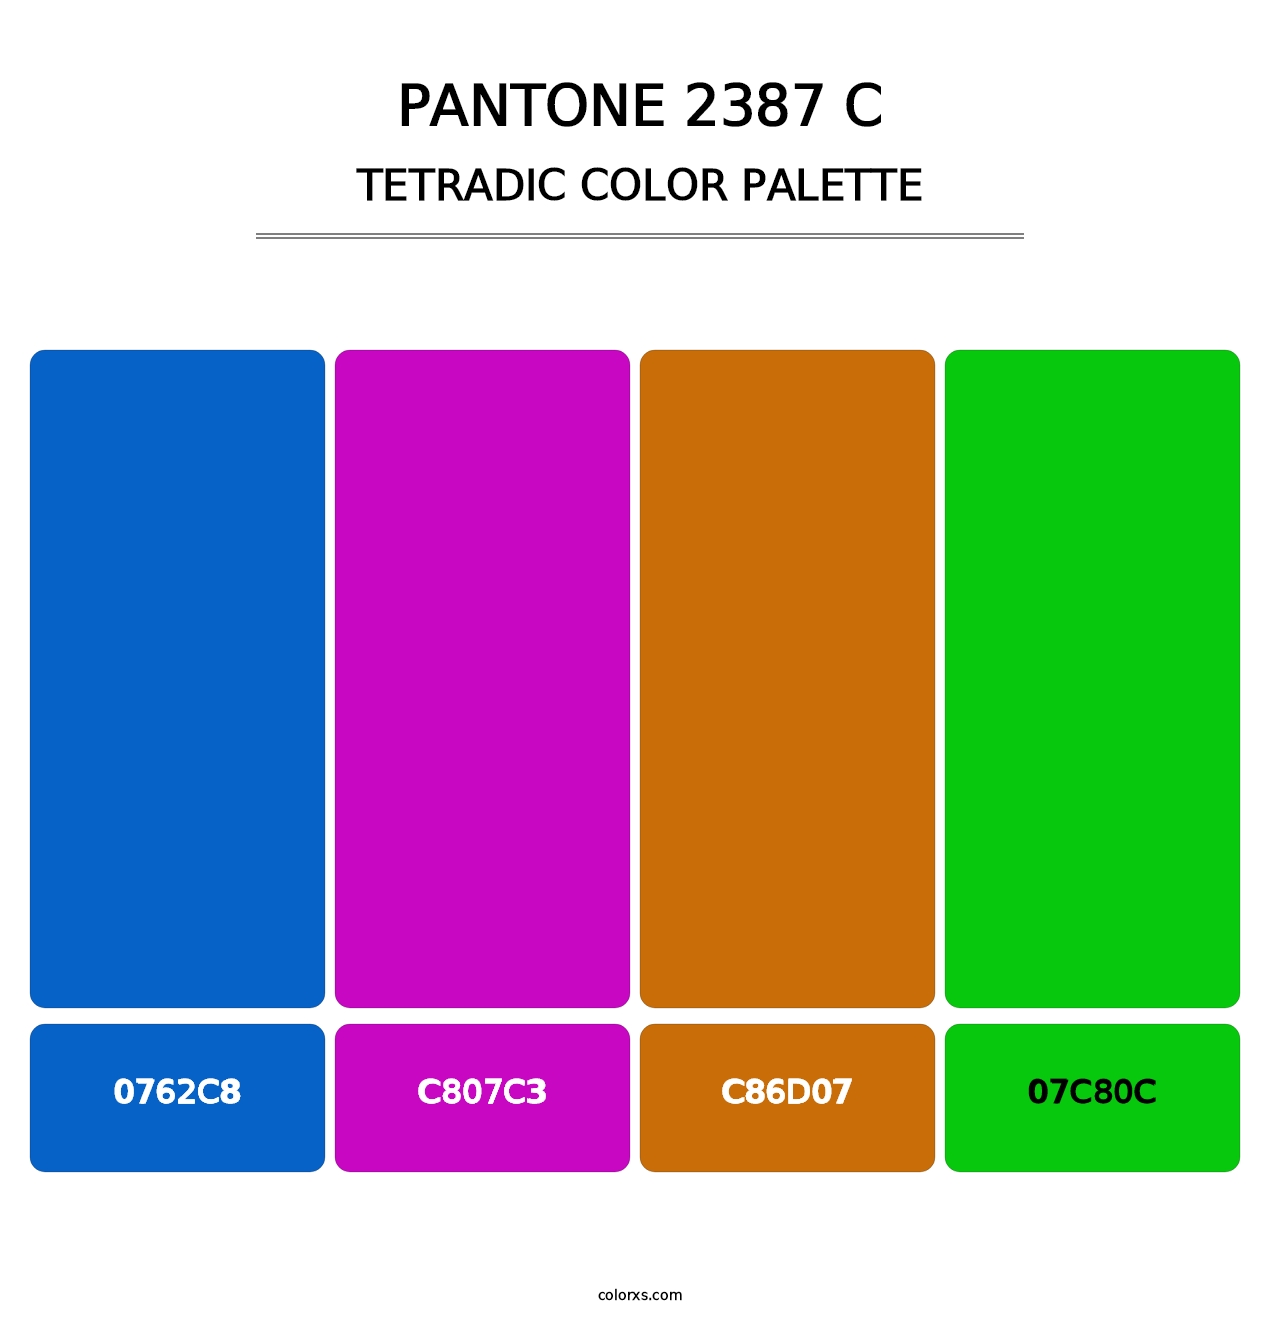 PANTONE 2387 C - Tetradic Color Palette